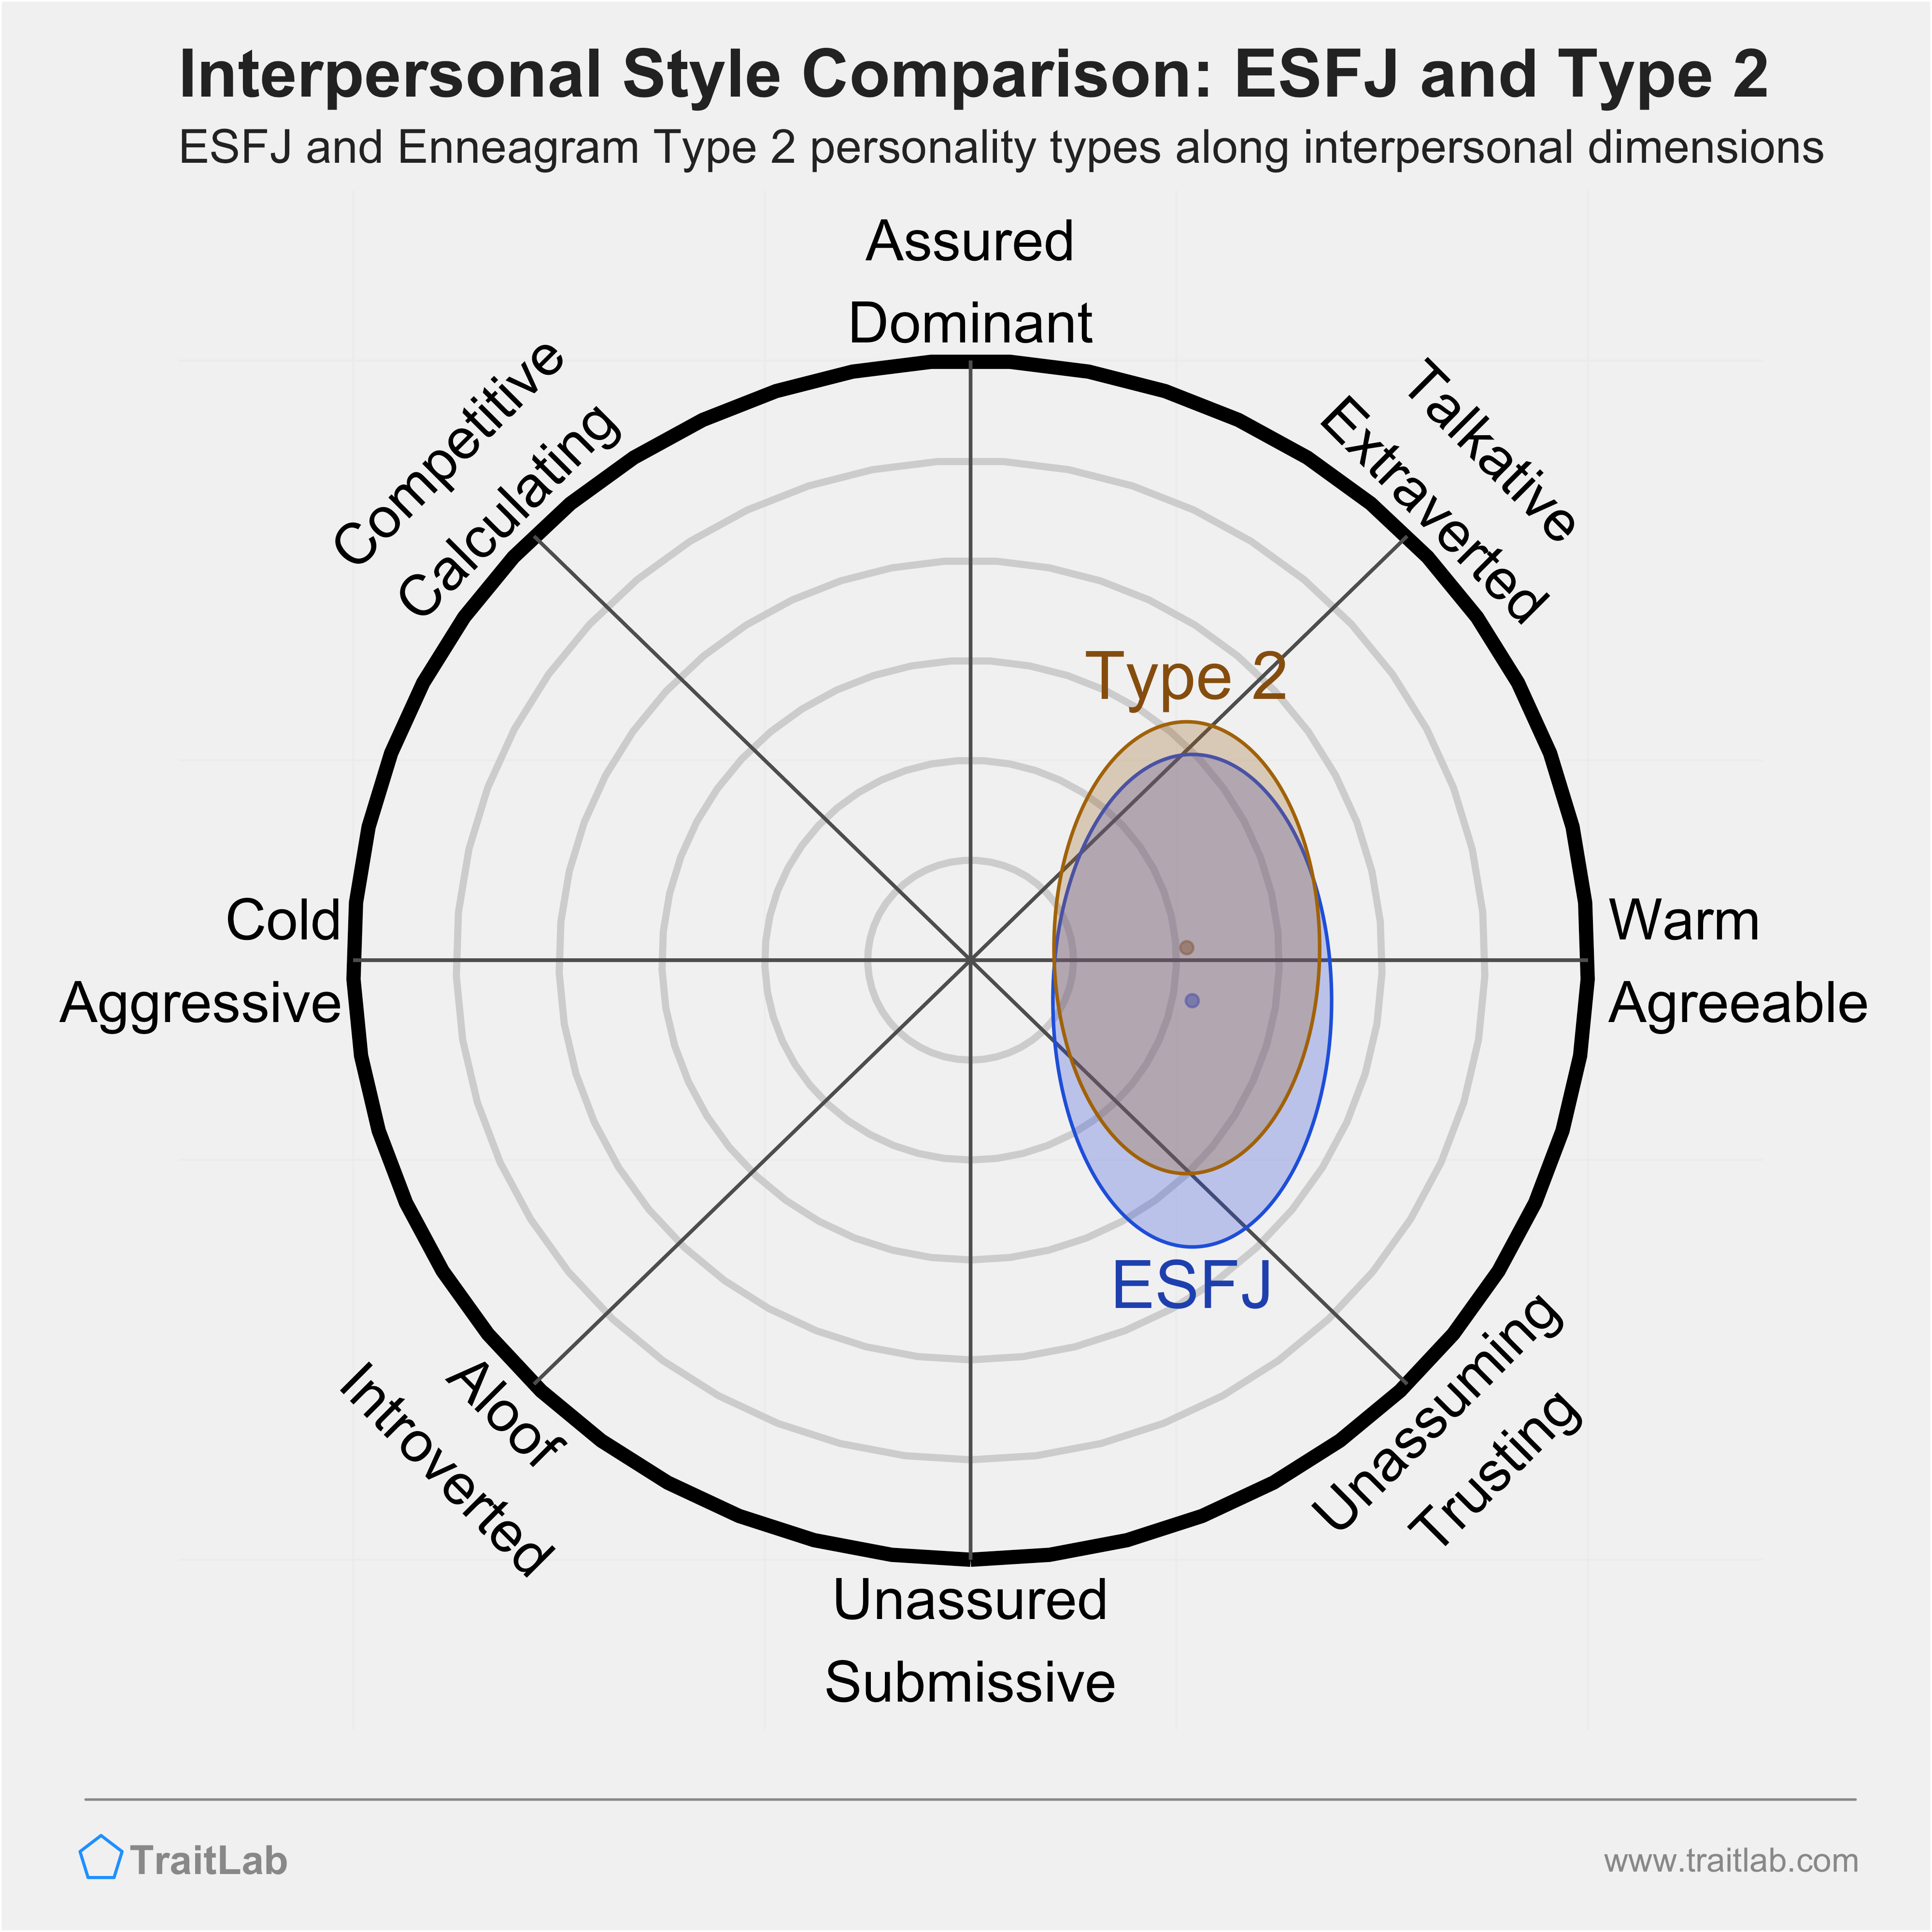 Enneagram ESFJ and Type 2 comparison across interpersonal dimensions